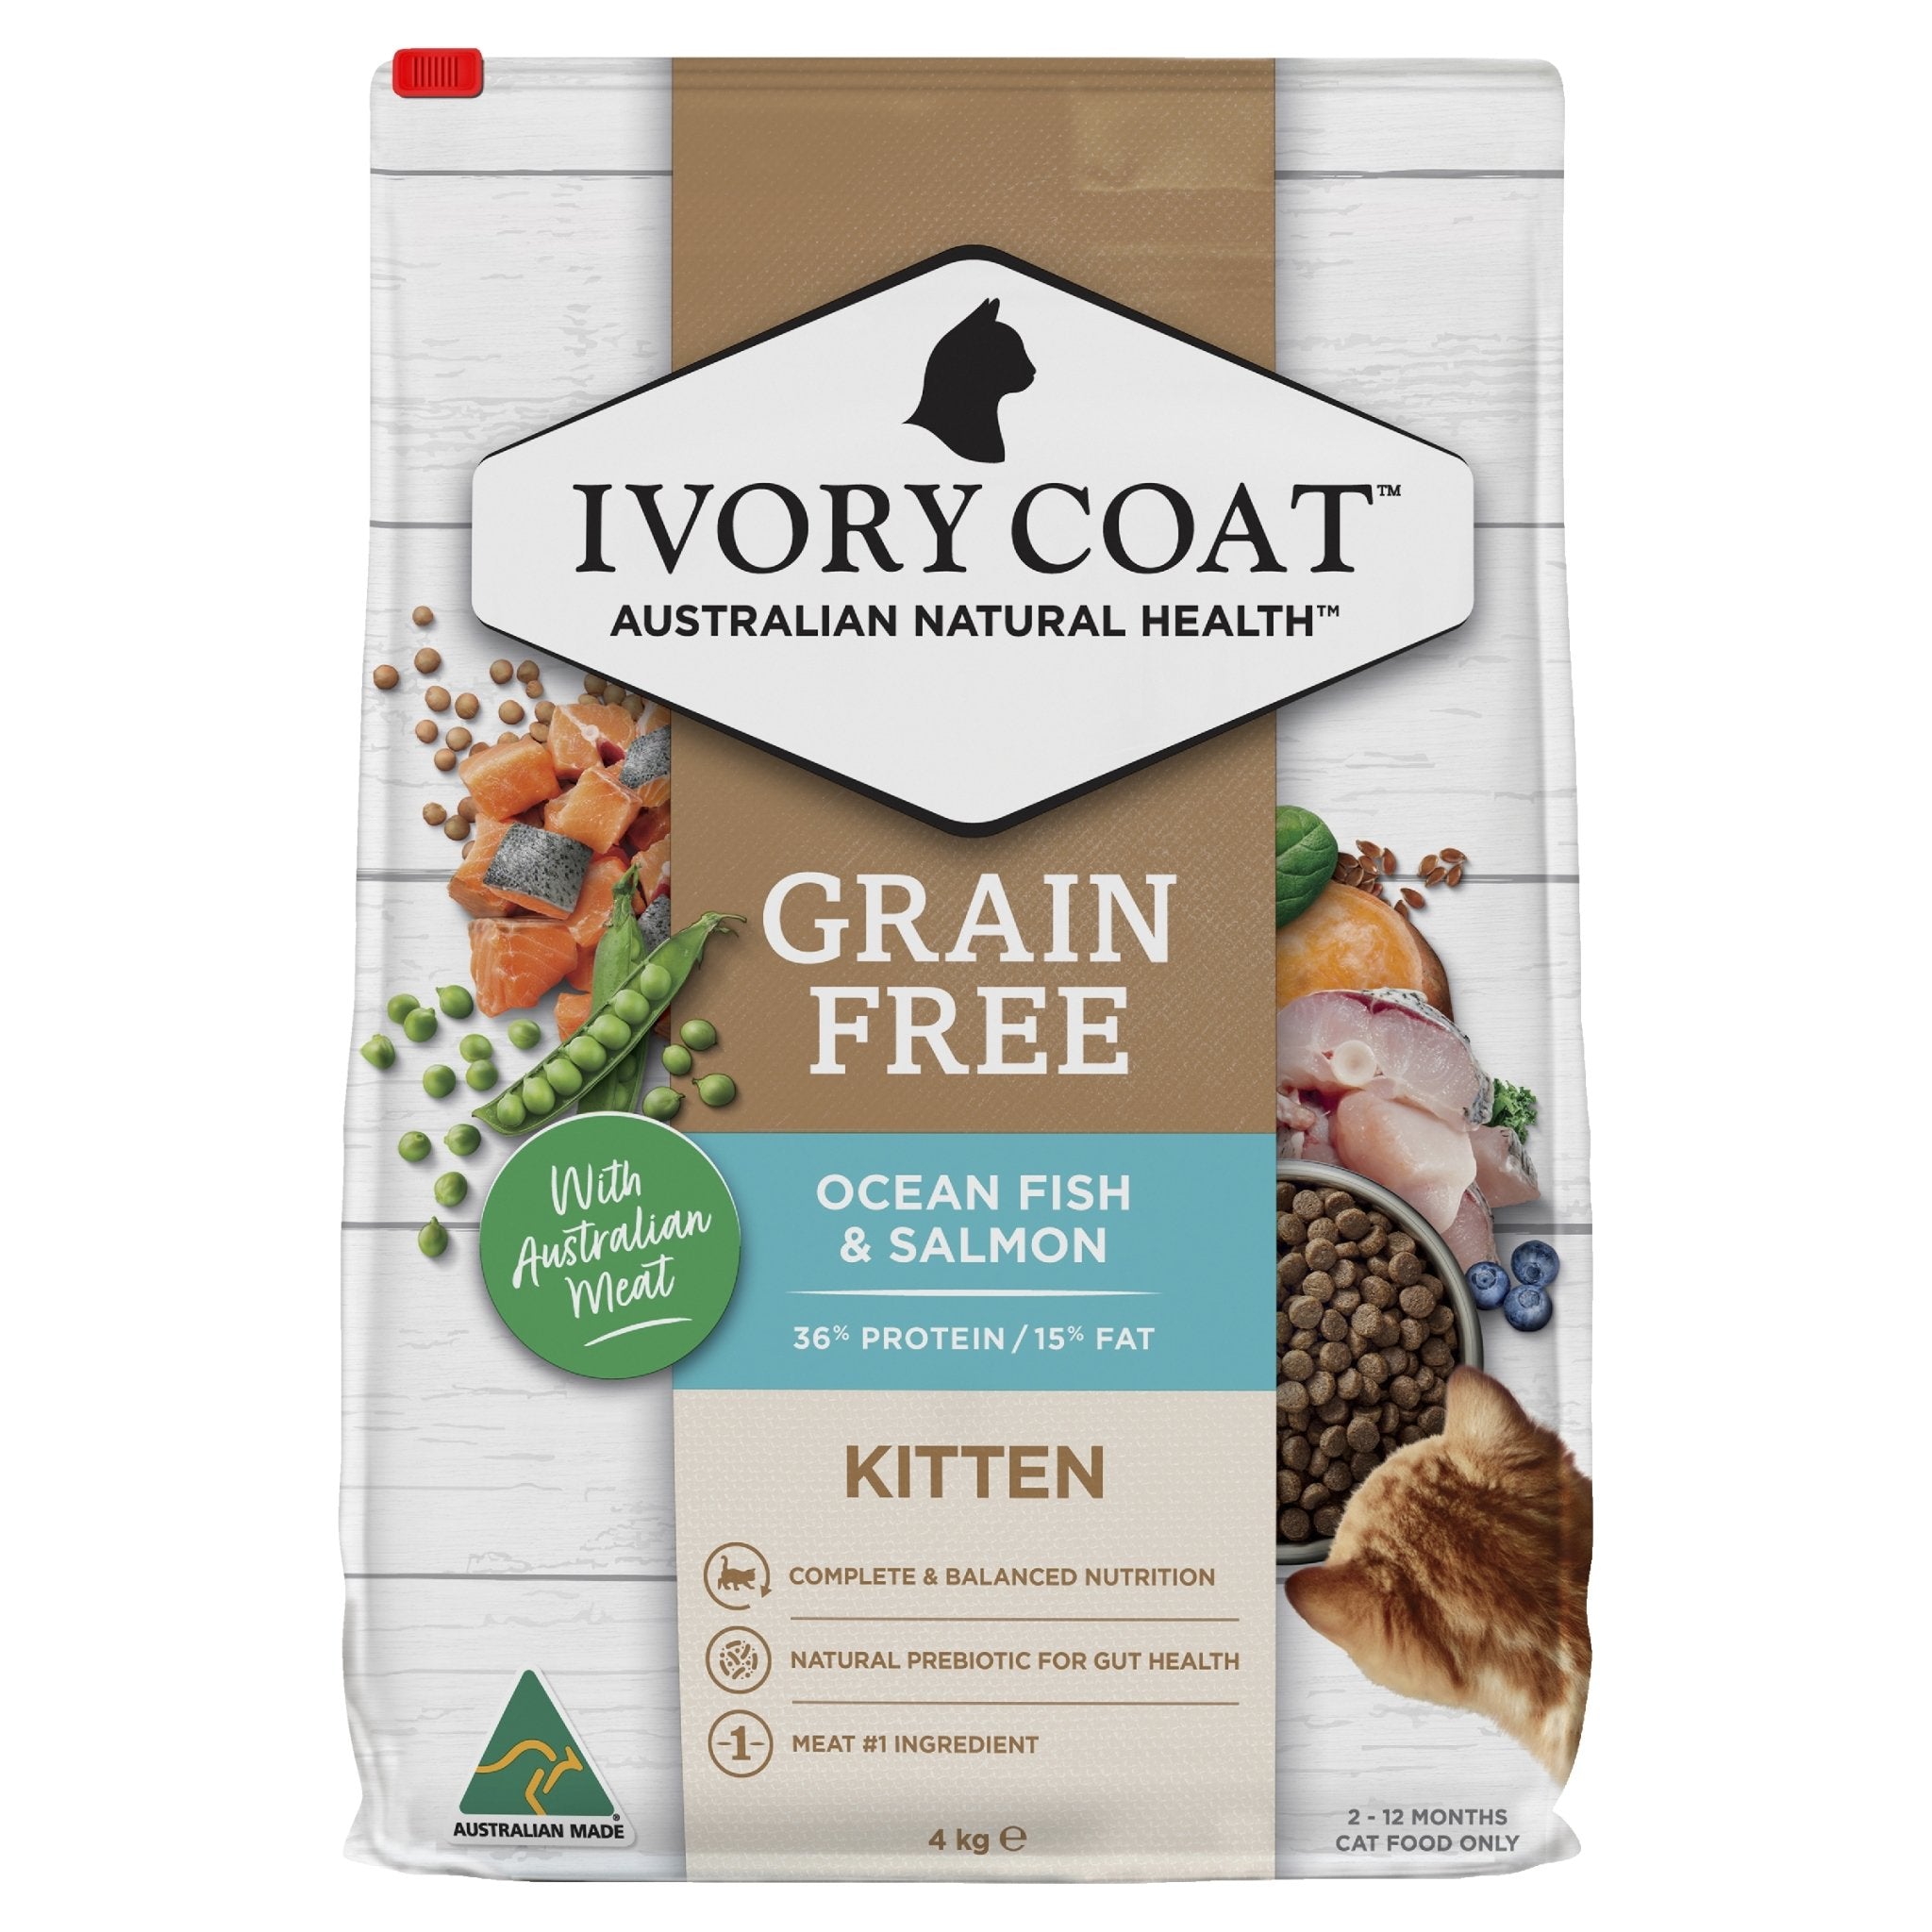 Ivory Coat Kitten Grain Free Ocean Fish & Salmon